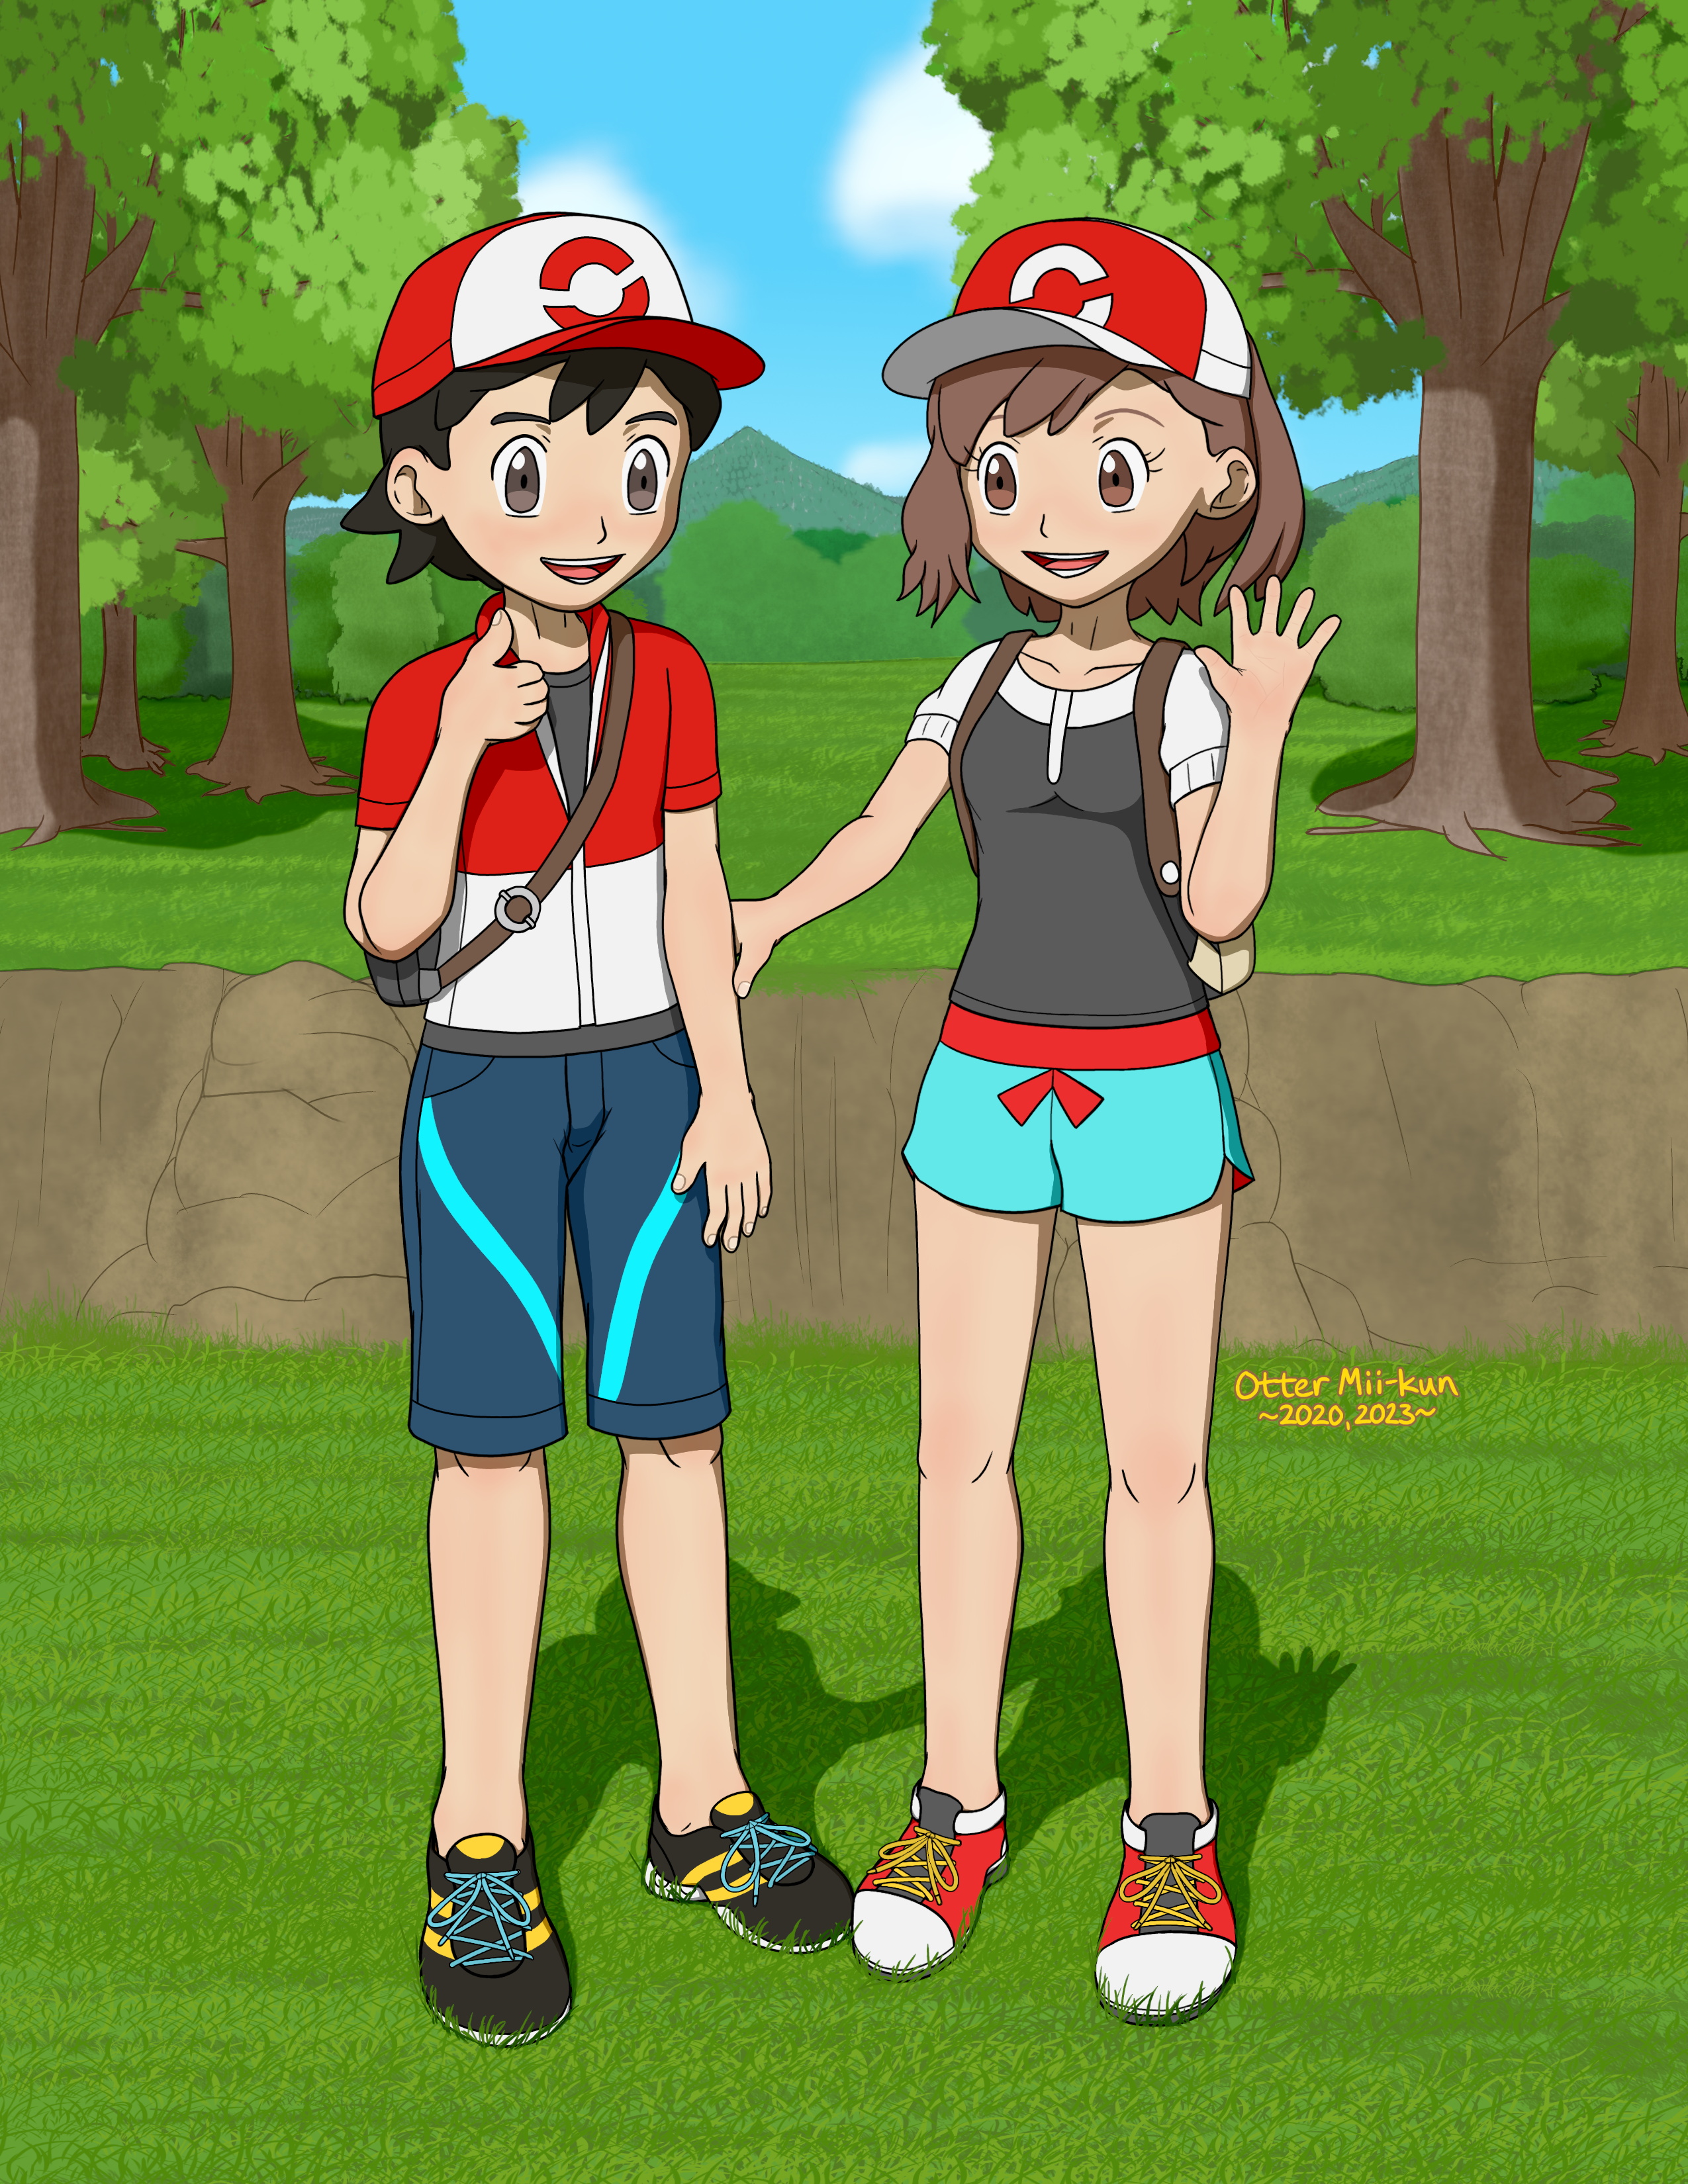 Chase and Elaine (Pokémon Let's Go Pikachu/Eevee)